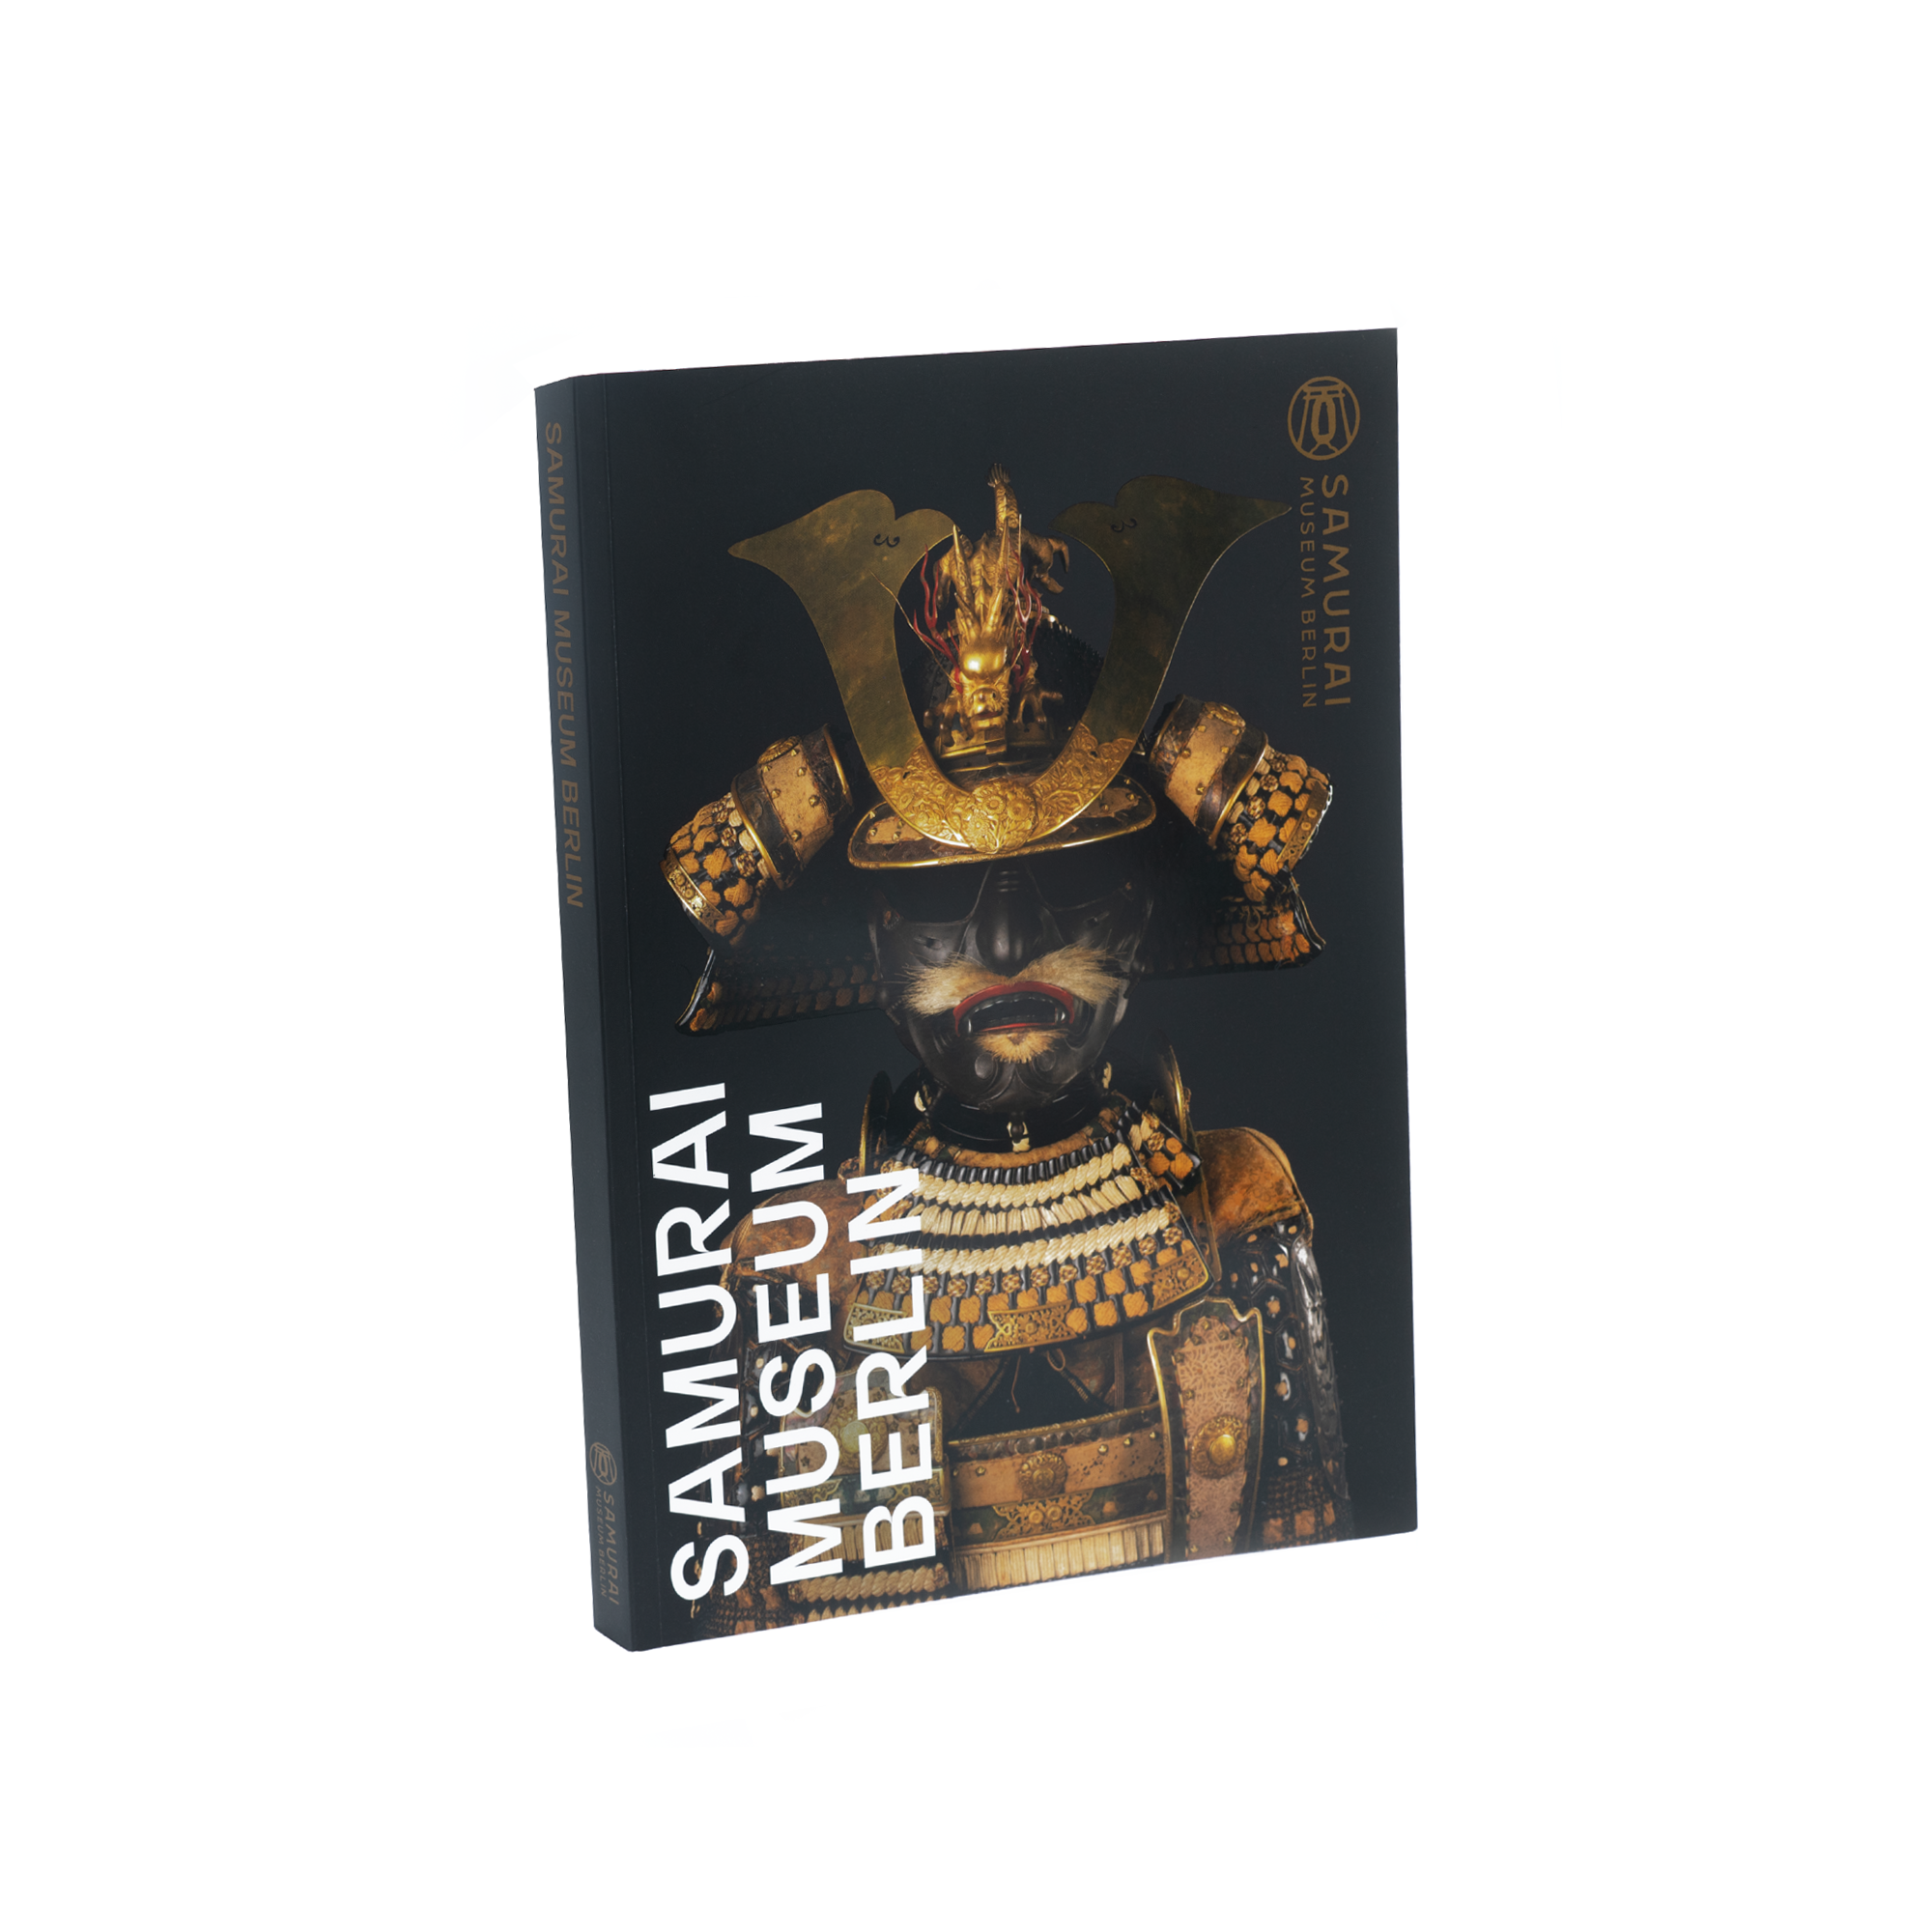 Katalog "Samurai Museum Berlin"